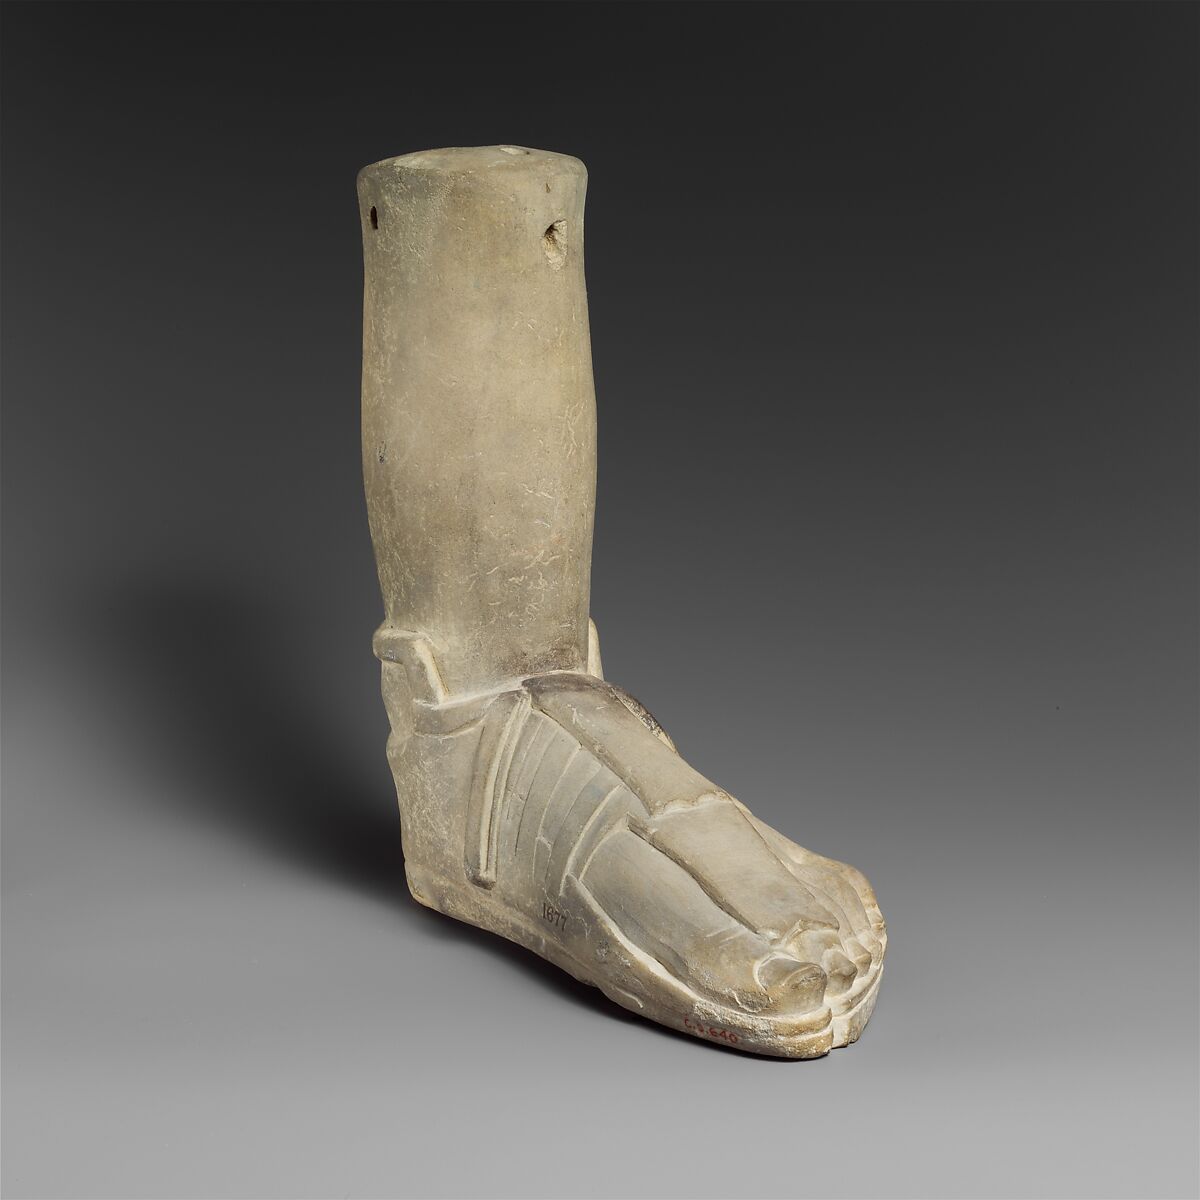 Limestone votive (?) foot with a sandal, Limestone, Greek or Roman, Cypriot 